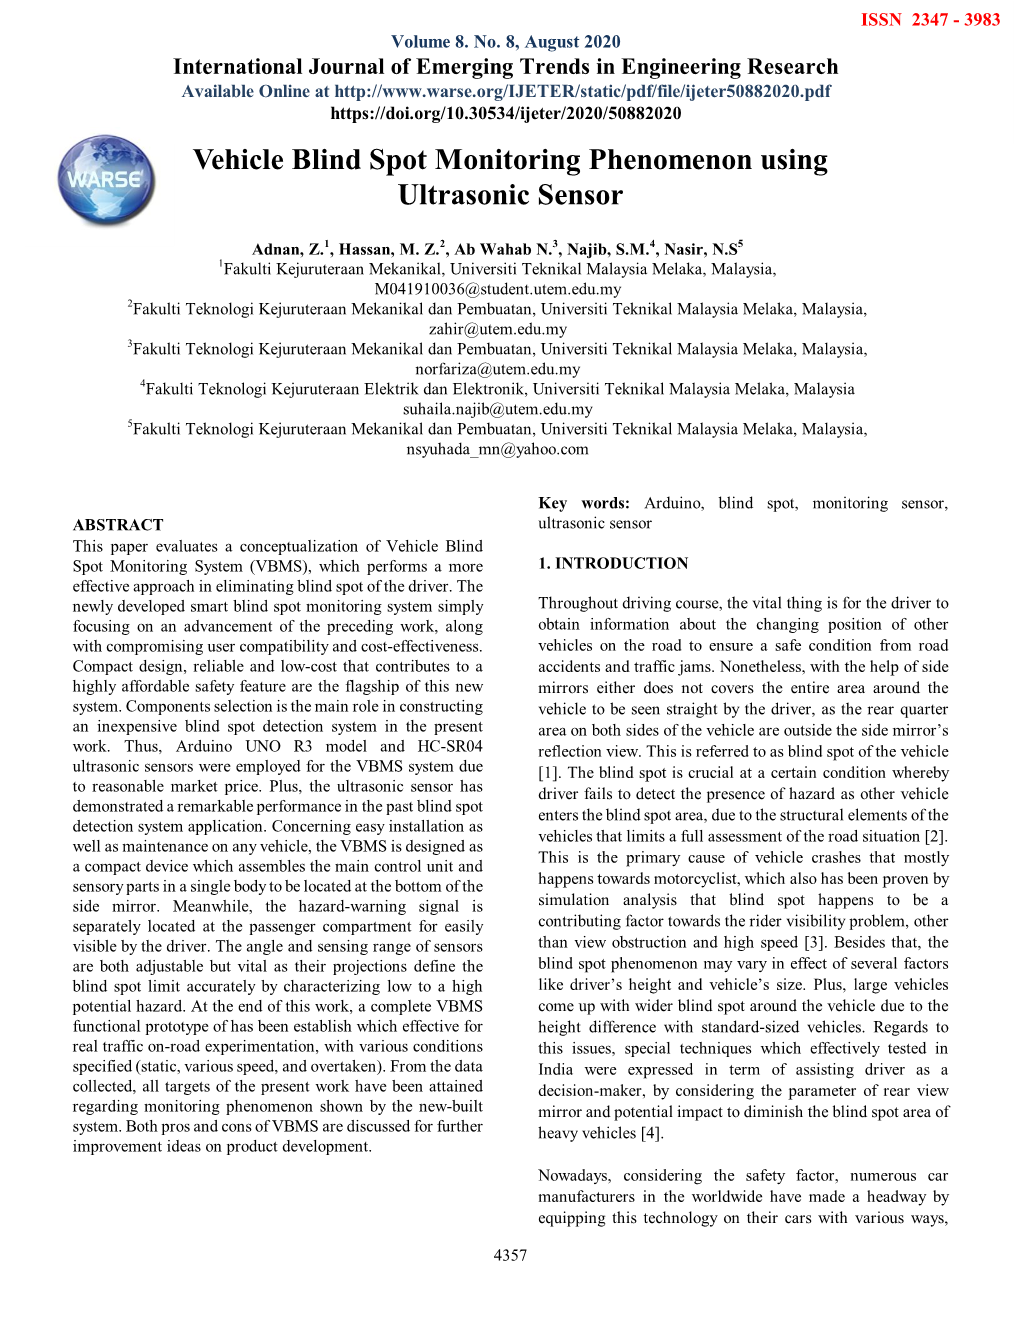 Vehicle Blind Spot Monitoring Phenomenon Using Ultrasonic Sensor